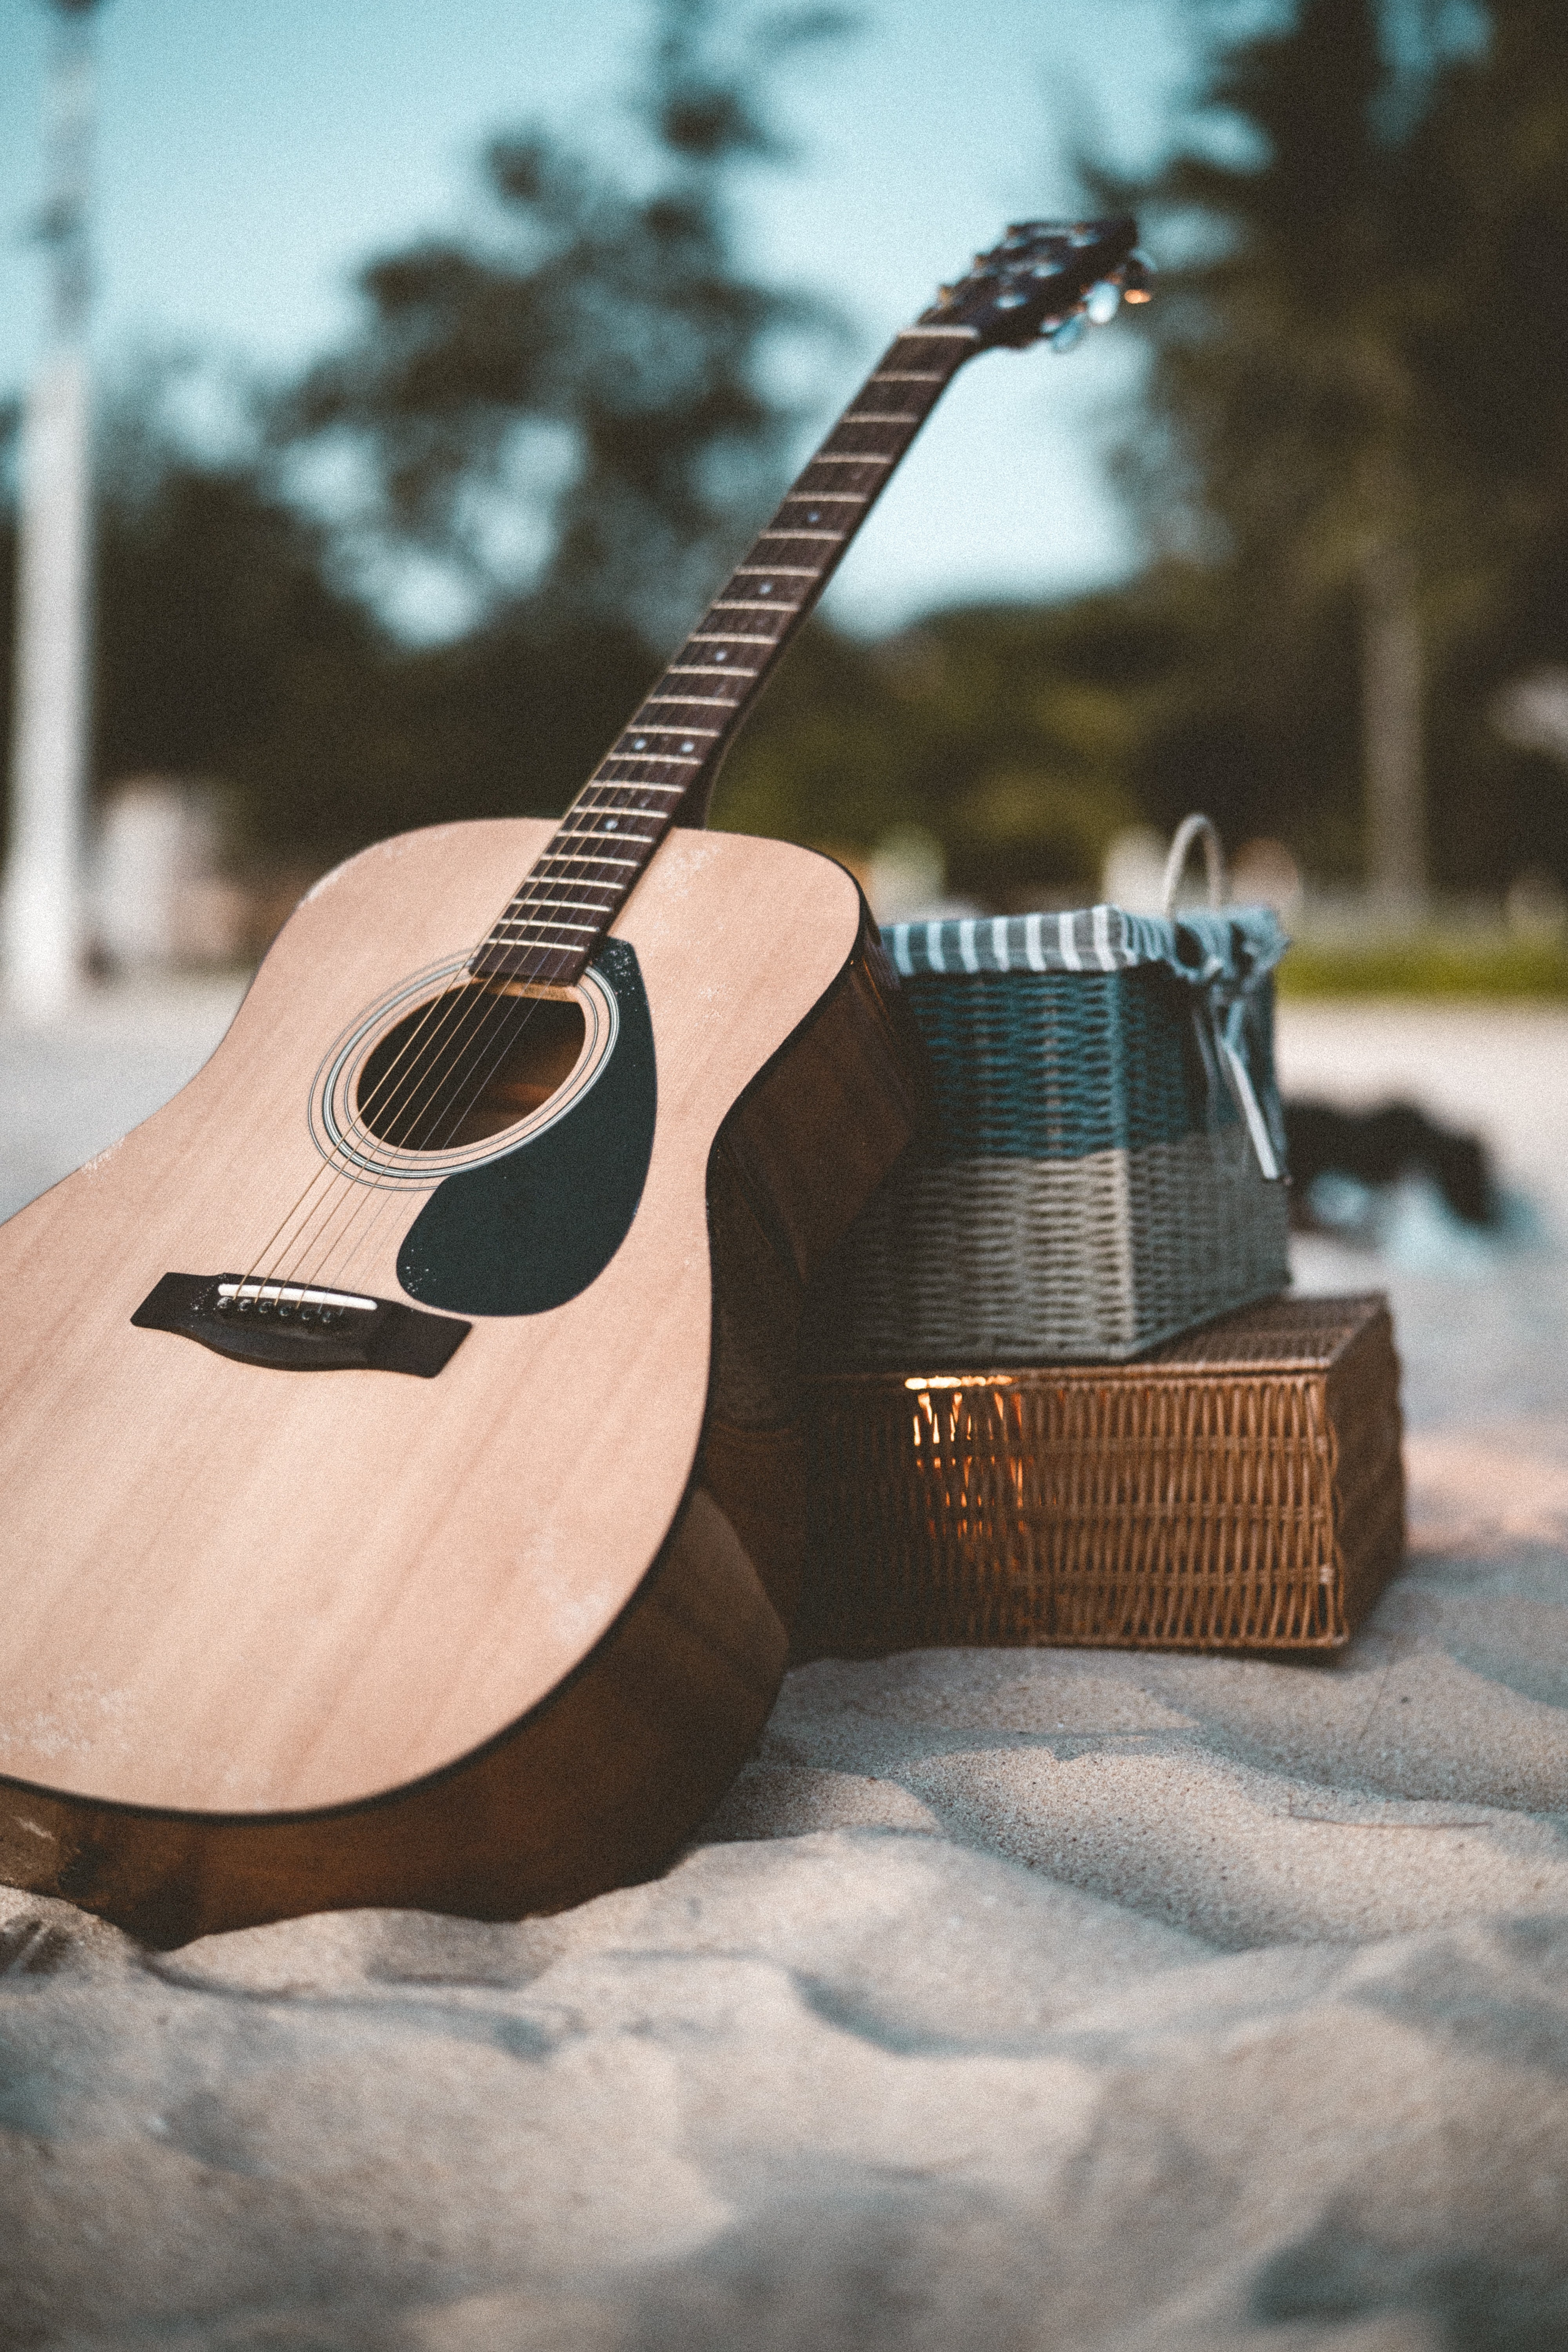 guitar, acoustic guitar, music, sand, brown, musical instrument wallpaper for mobile